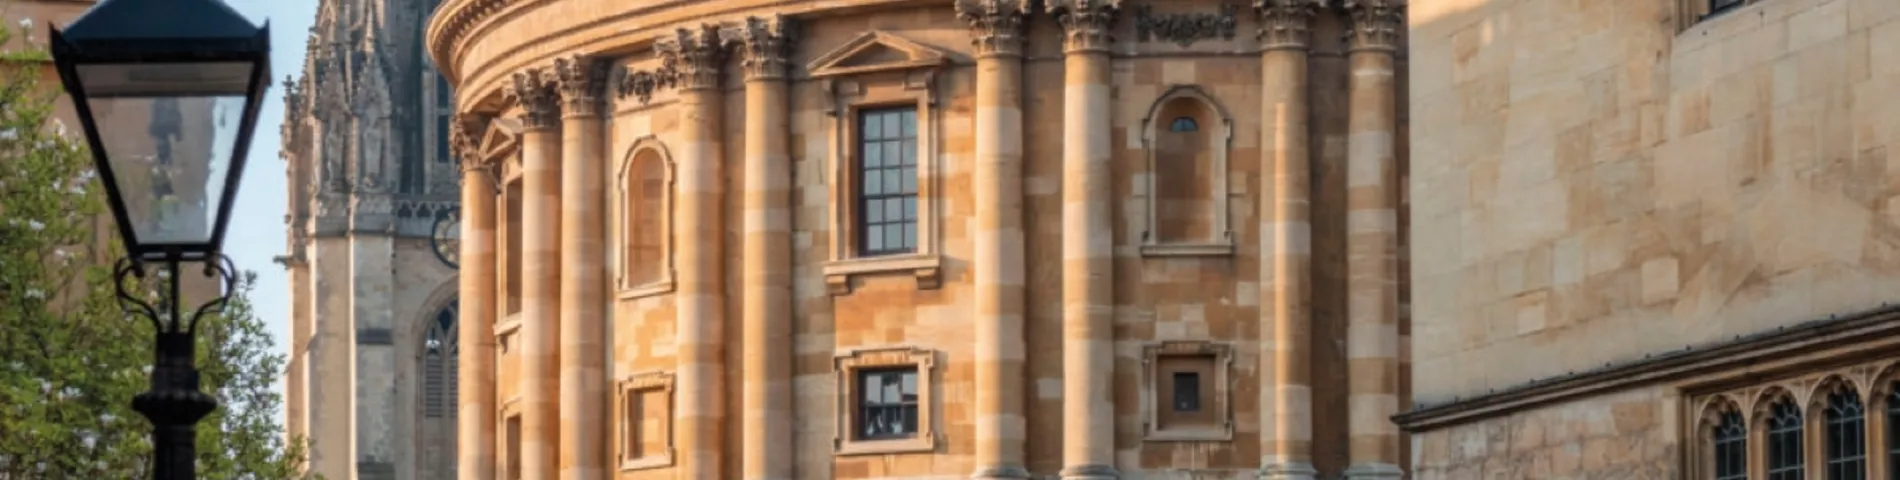 Oxford Royale Academy resim 1